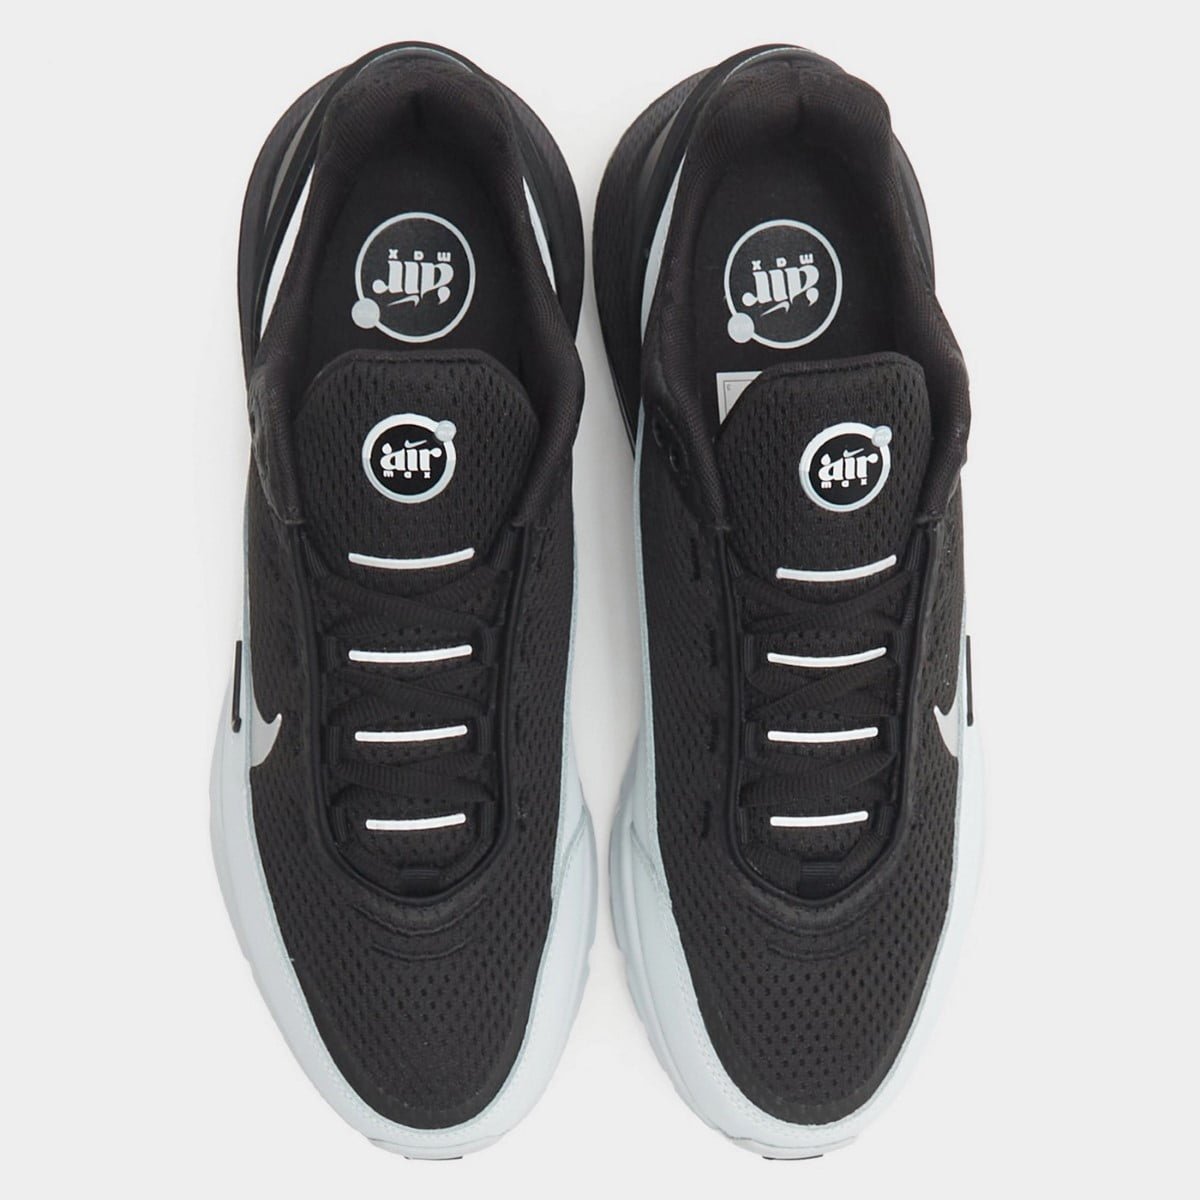 Nike Air Max Pulse "Grey/Black"